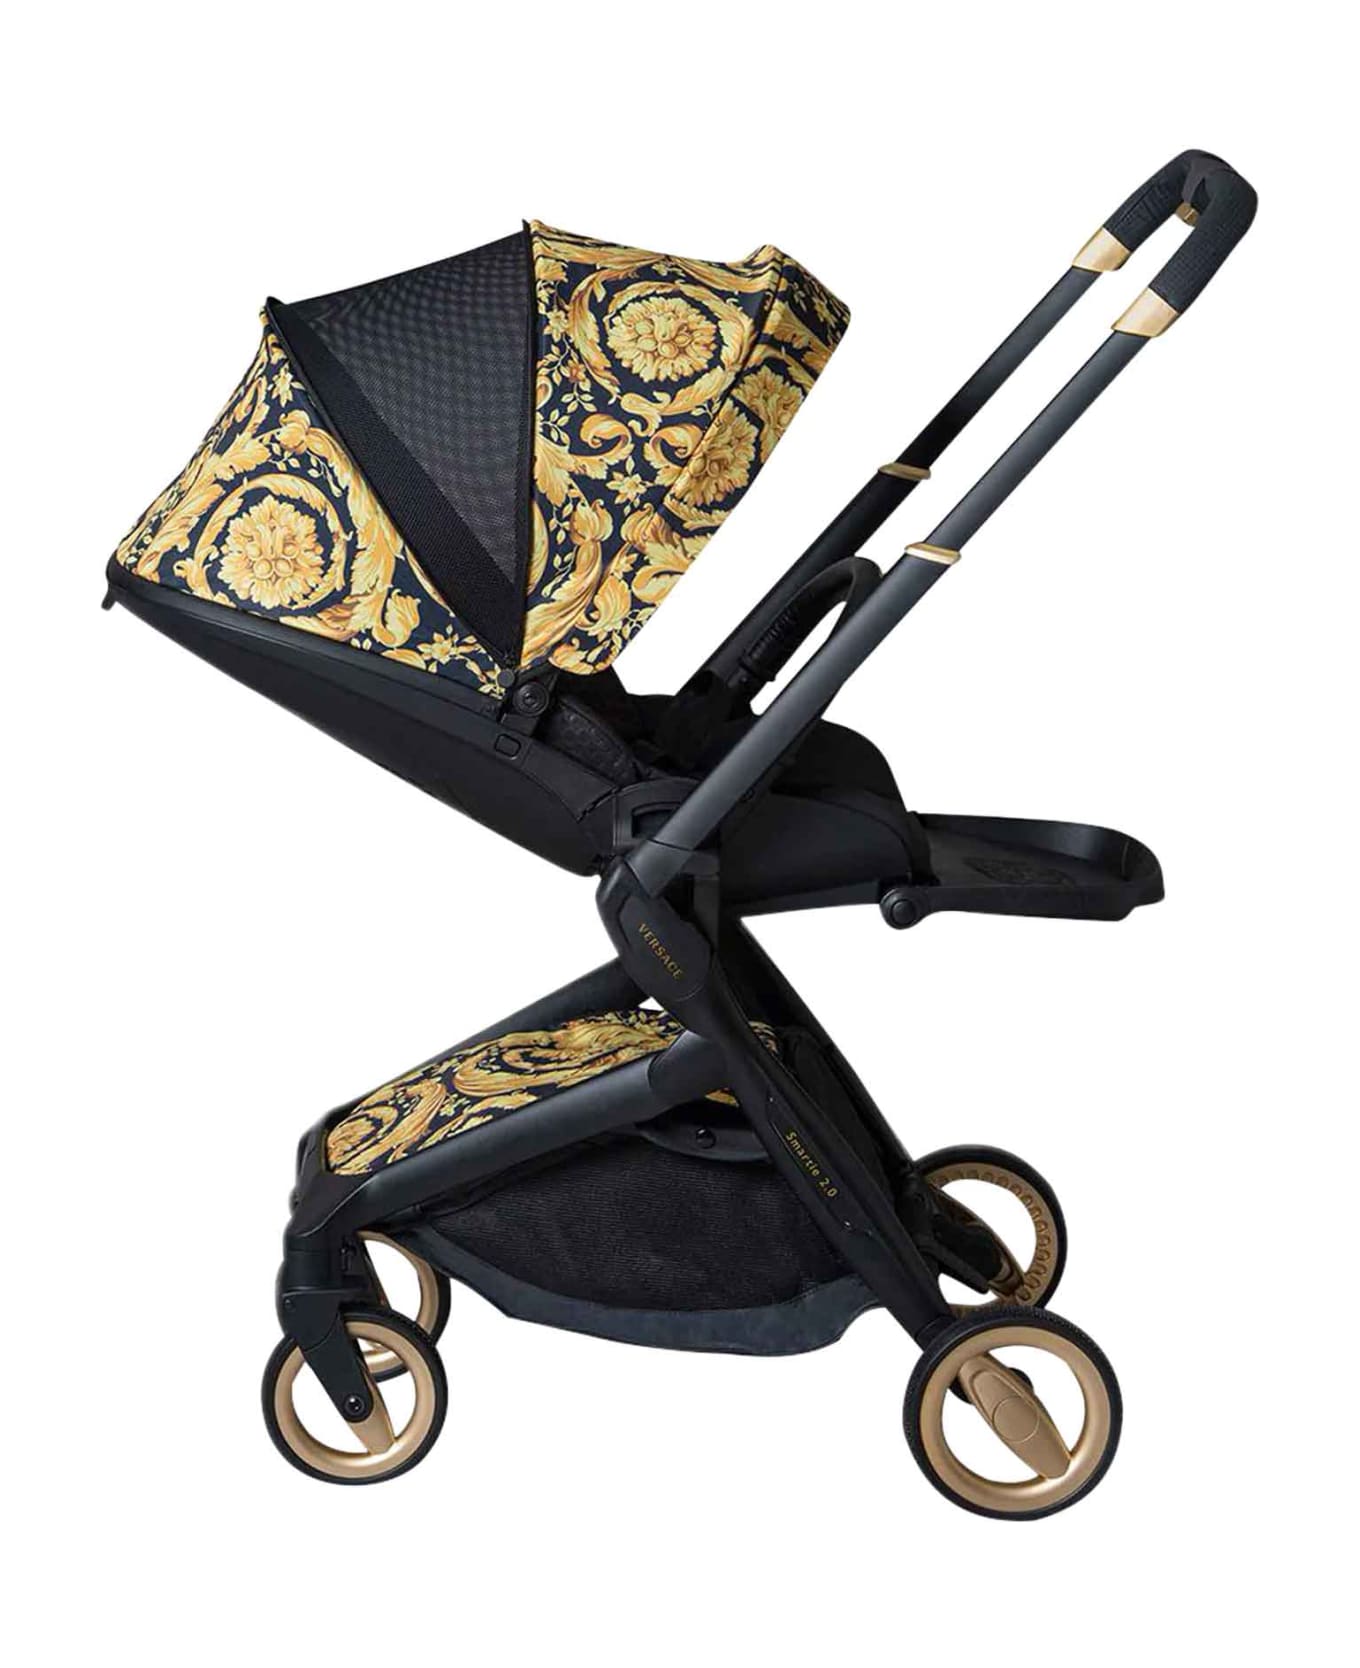 Versace Stroller With Baroque Print - Nero/oro